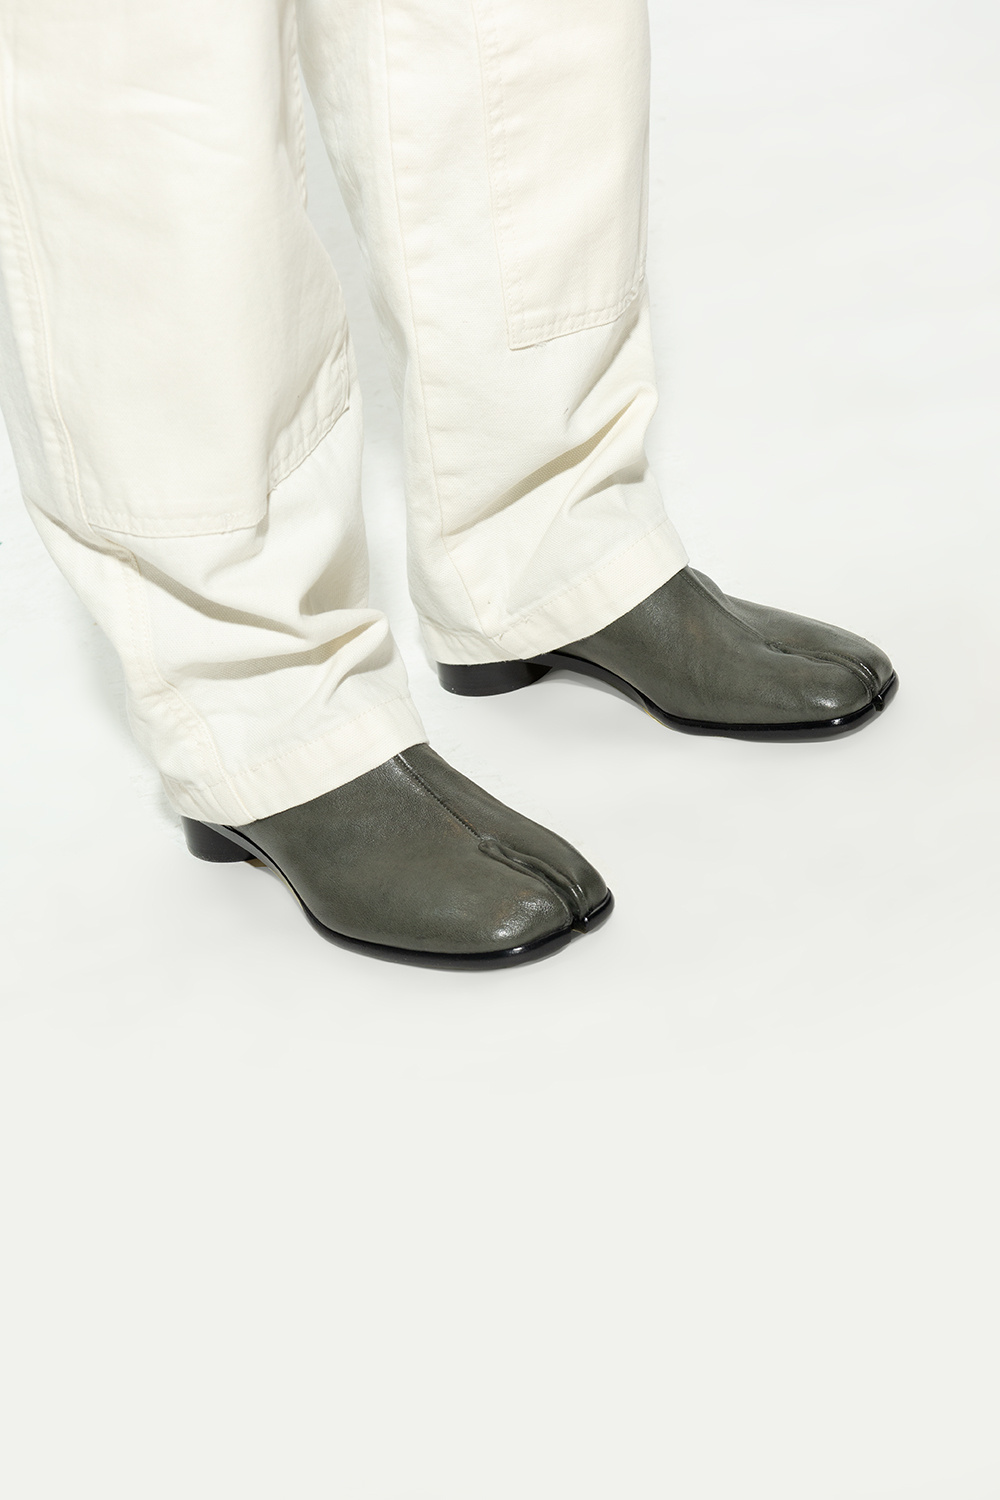 Maison Margiela 'Tabi' leather ankle boots